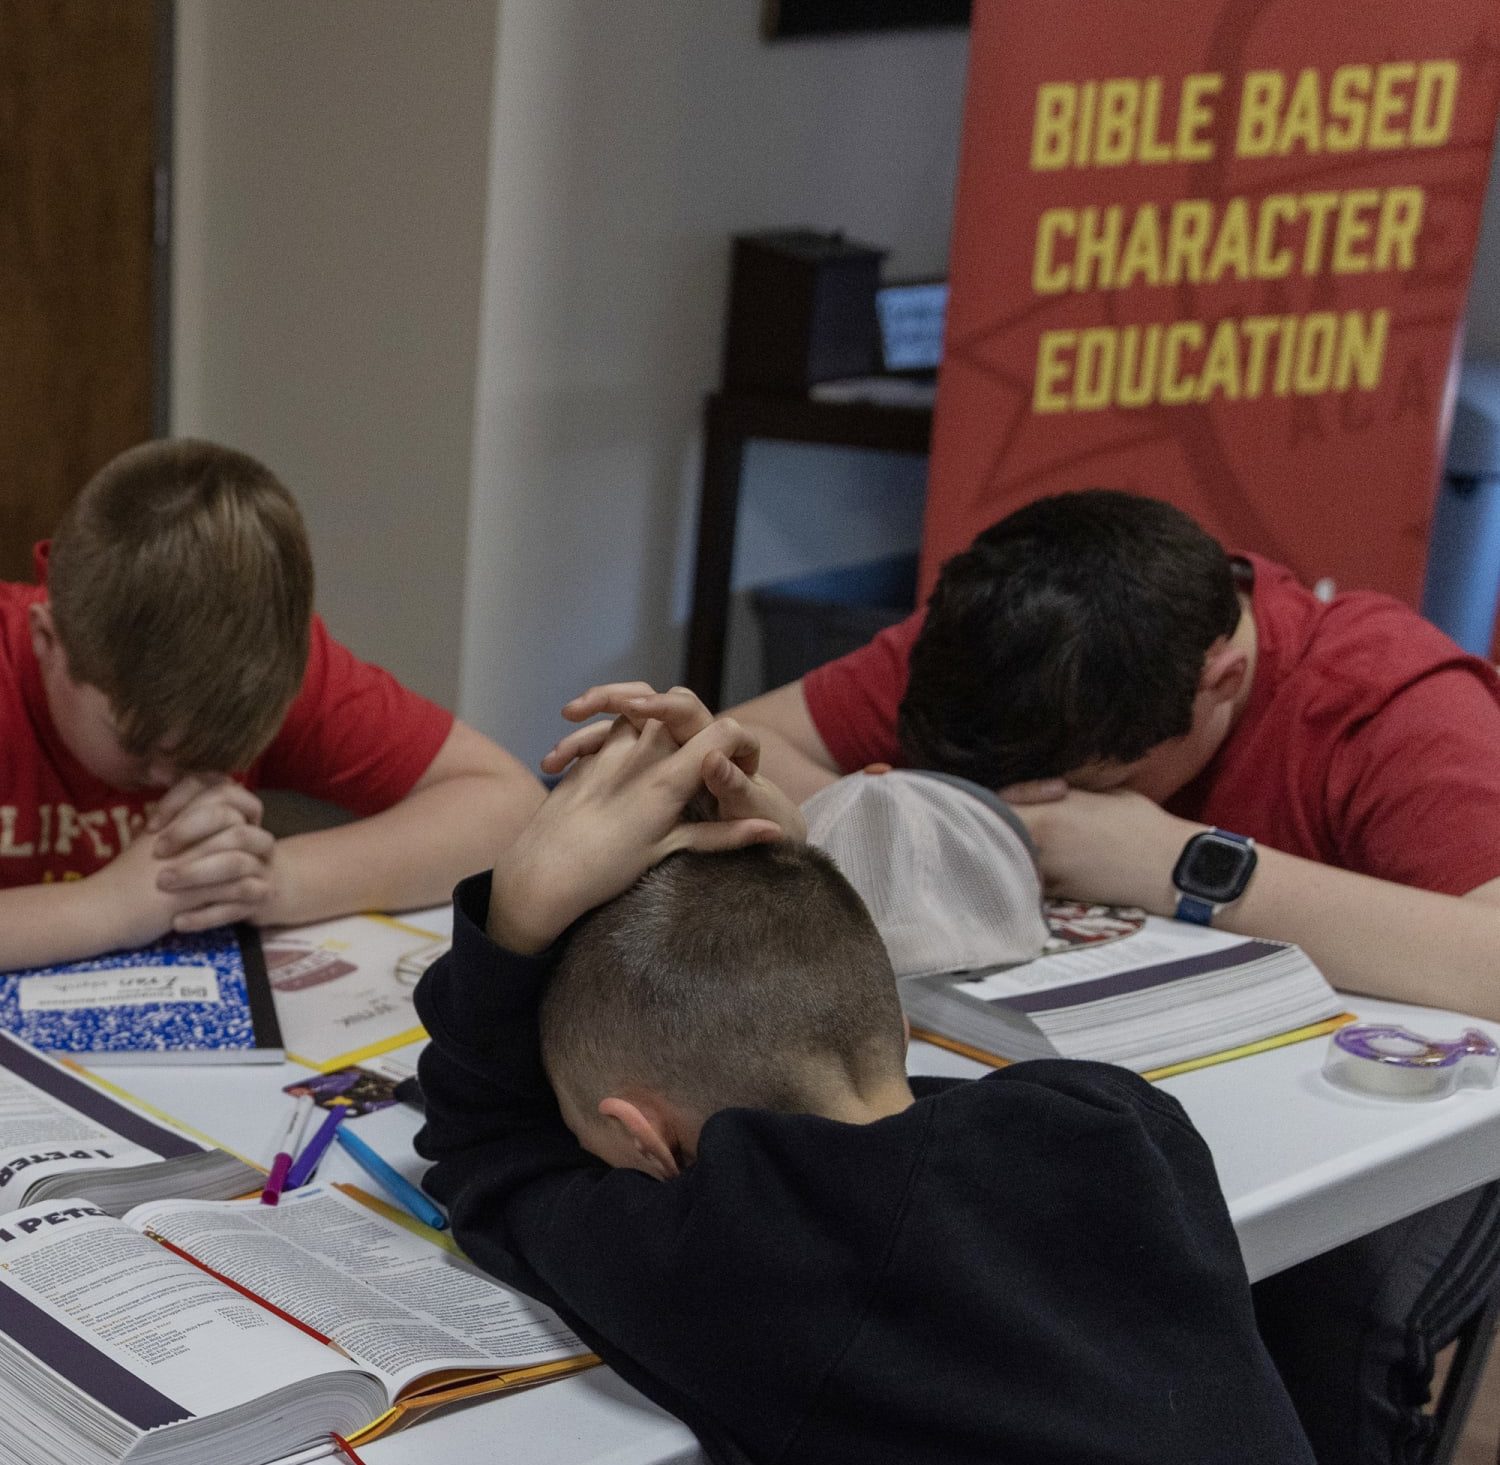 Oklahoma orders schools to teach Bible ‘immediately’